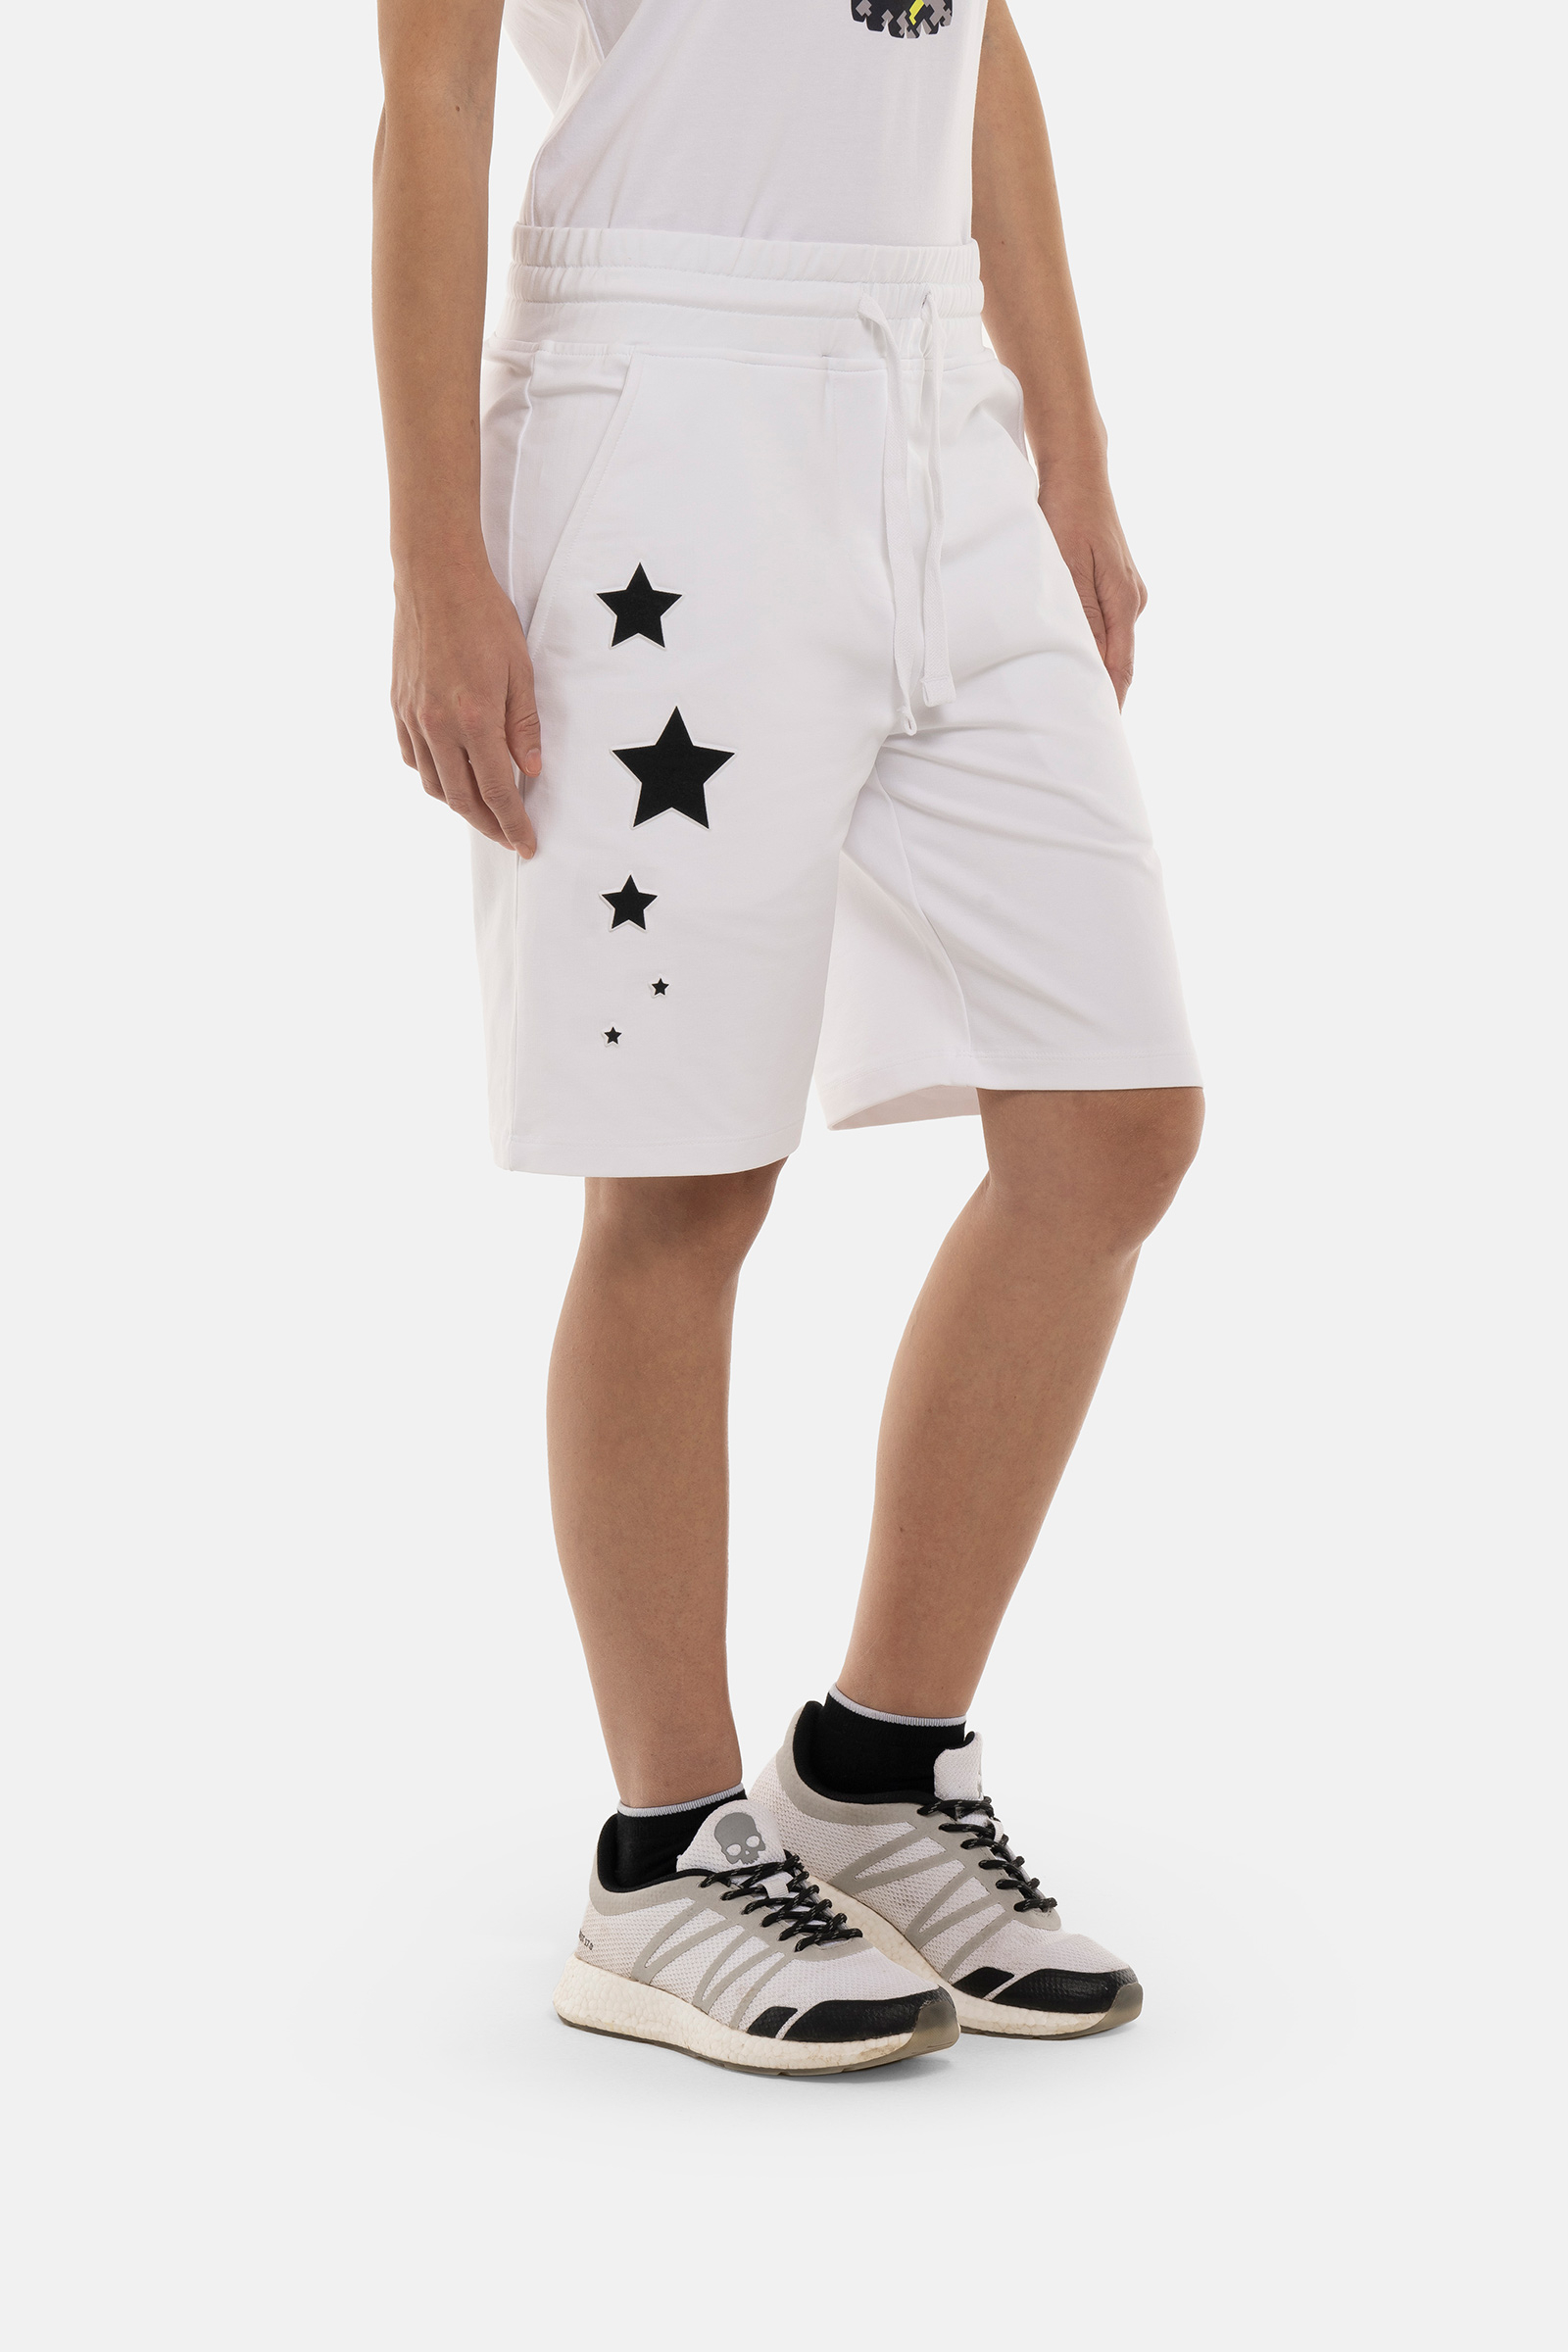 STARS SHORTS - WHITE - Hydrogen - Luxury Sportwear